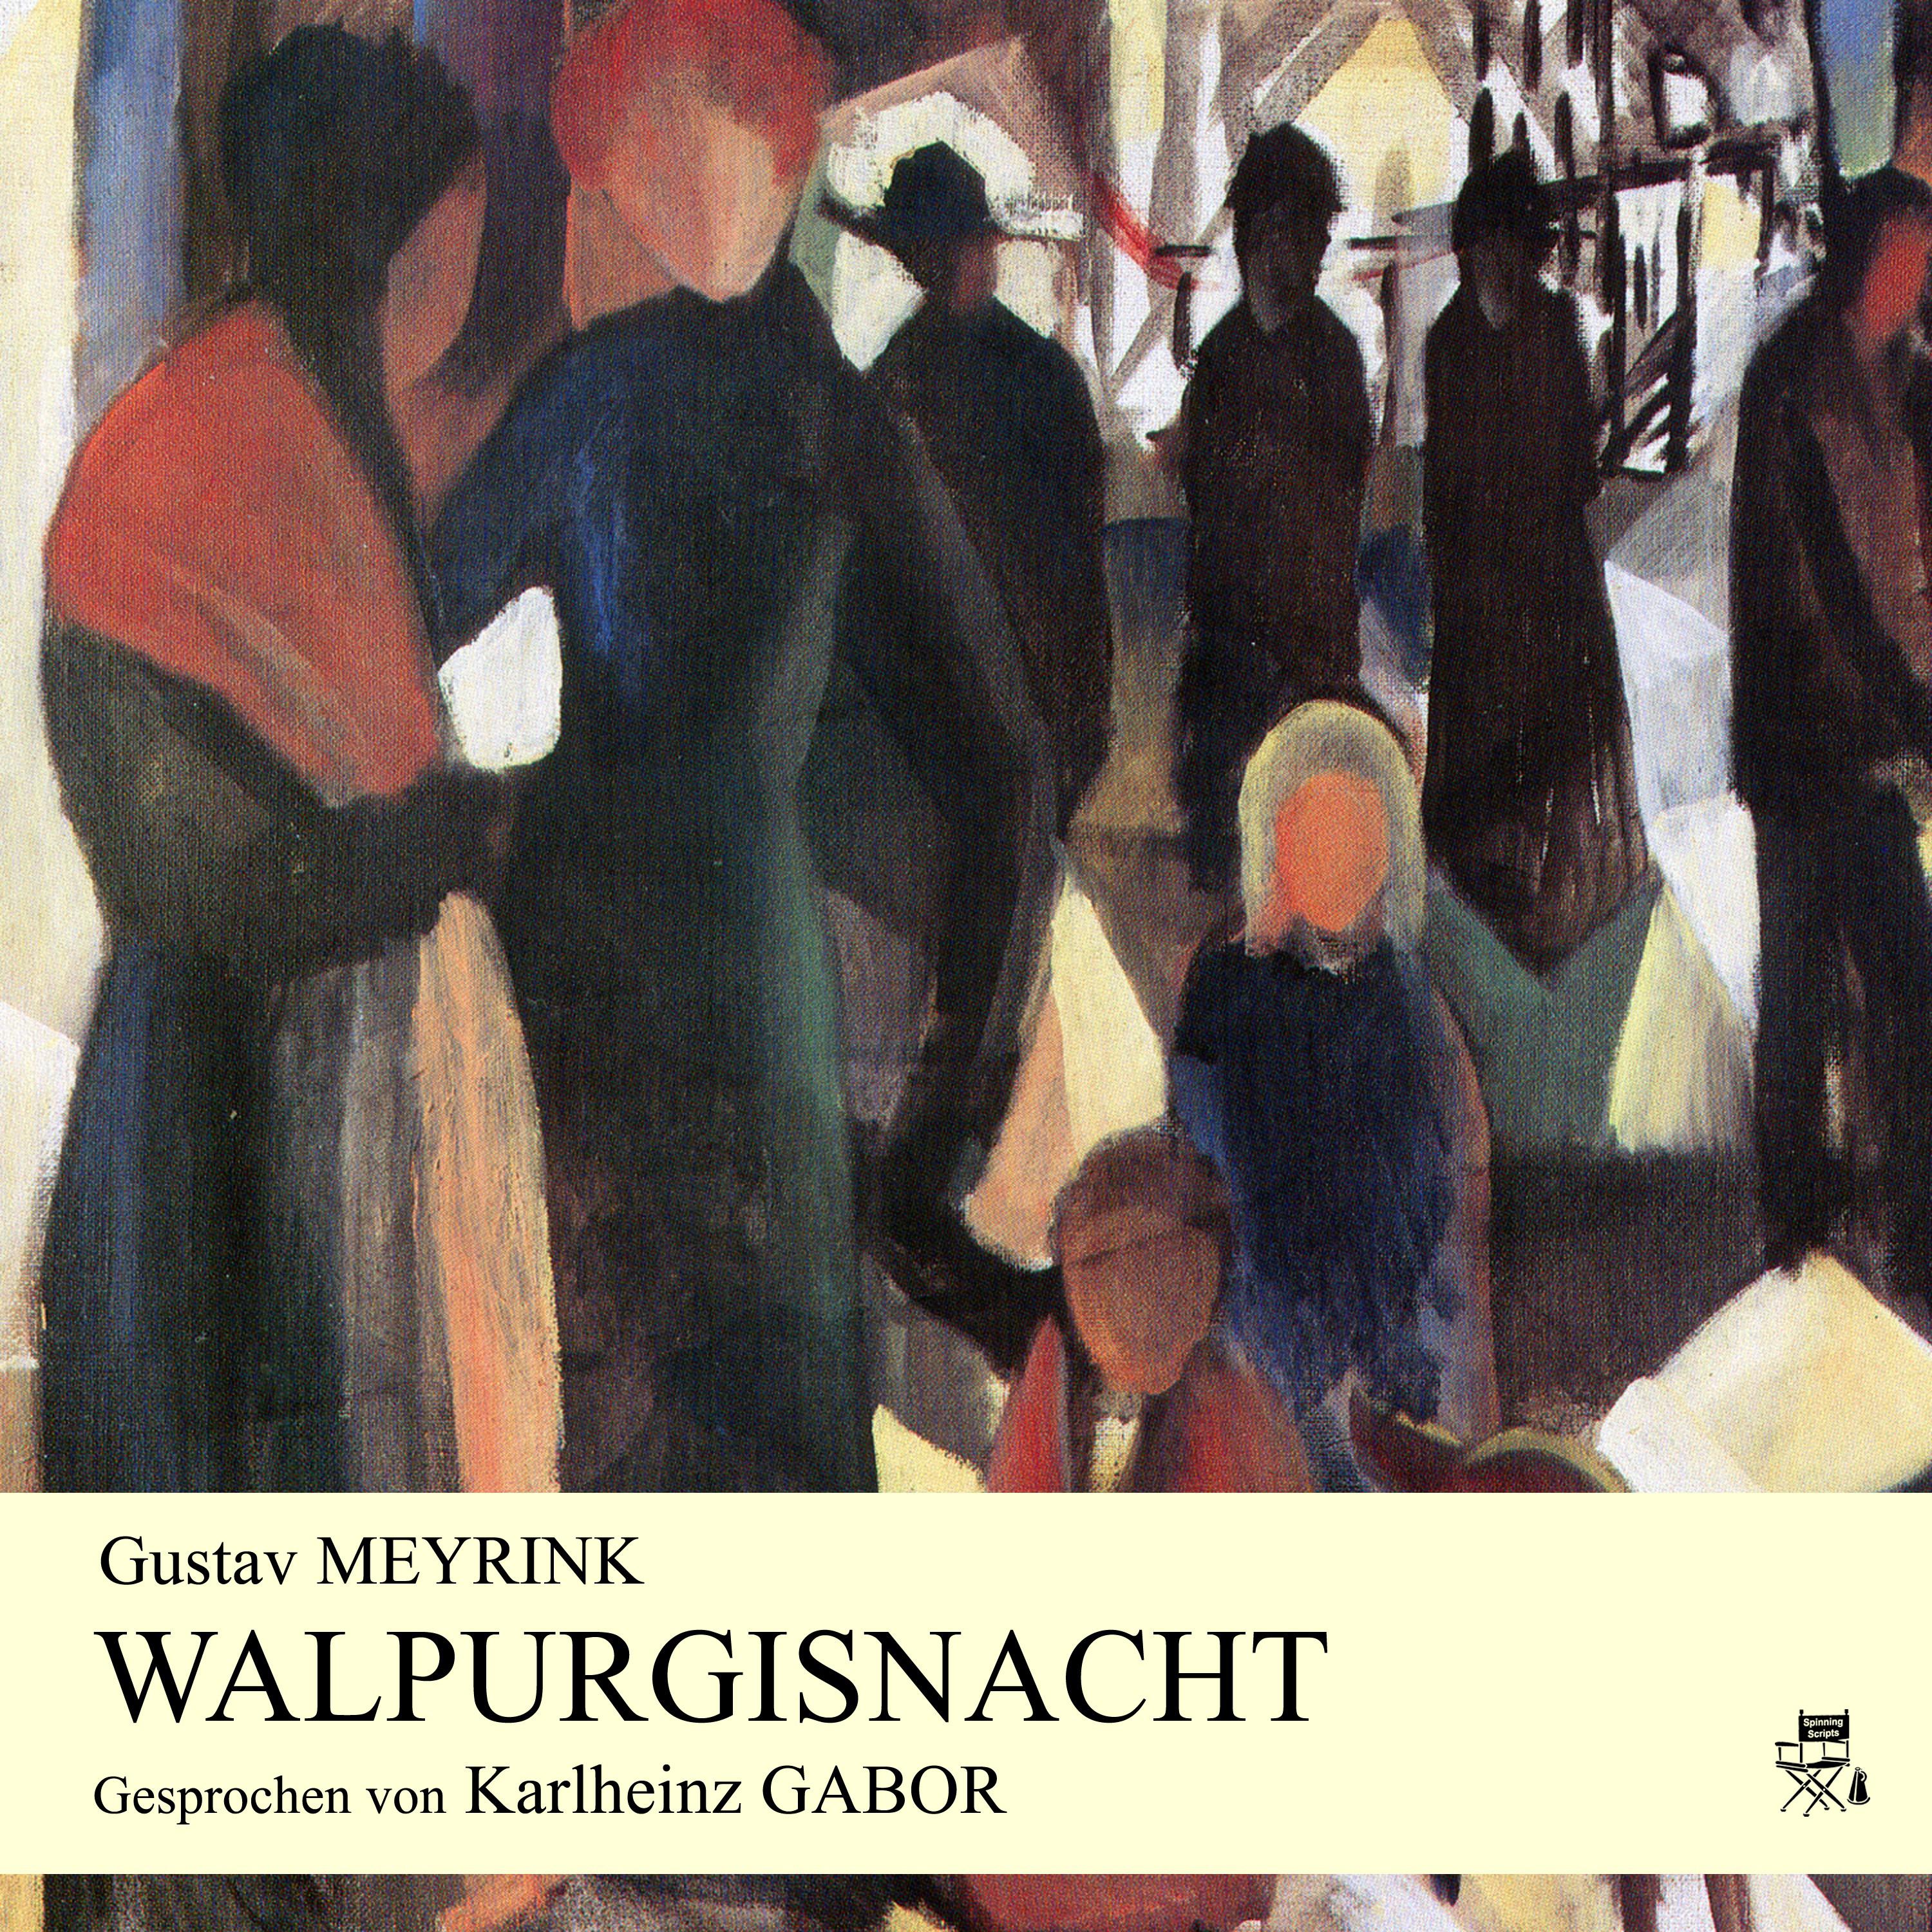 Kapitel 4: Walpurgisnacht (Teil 43)